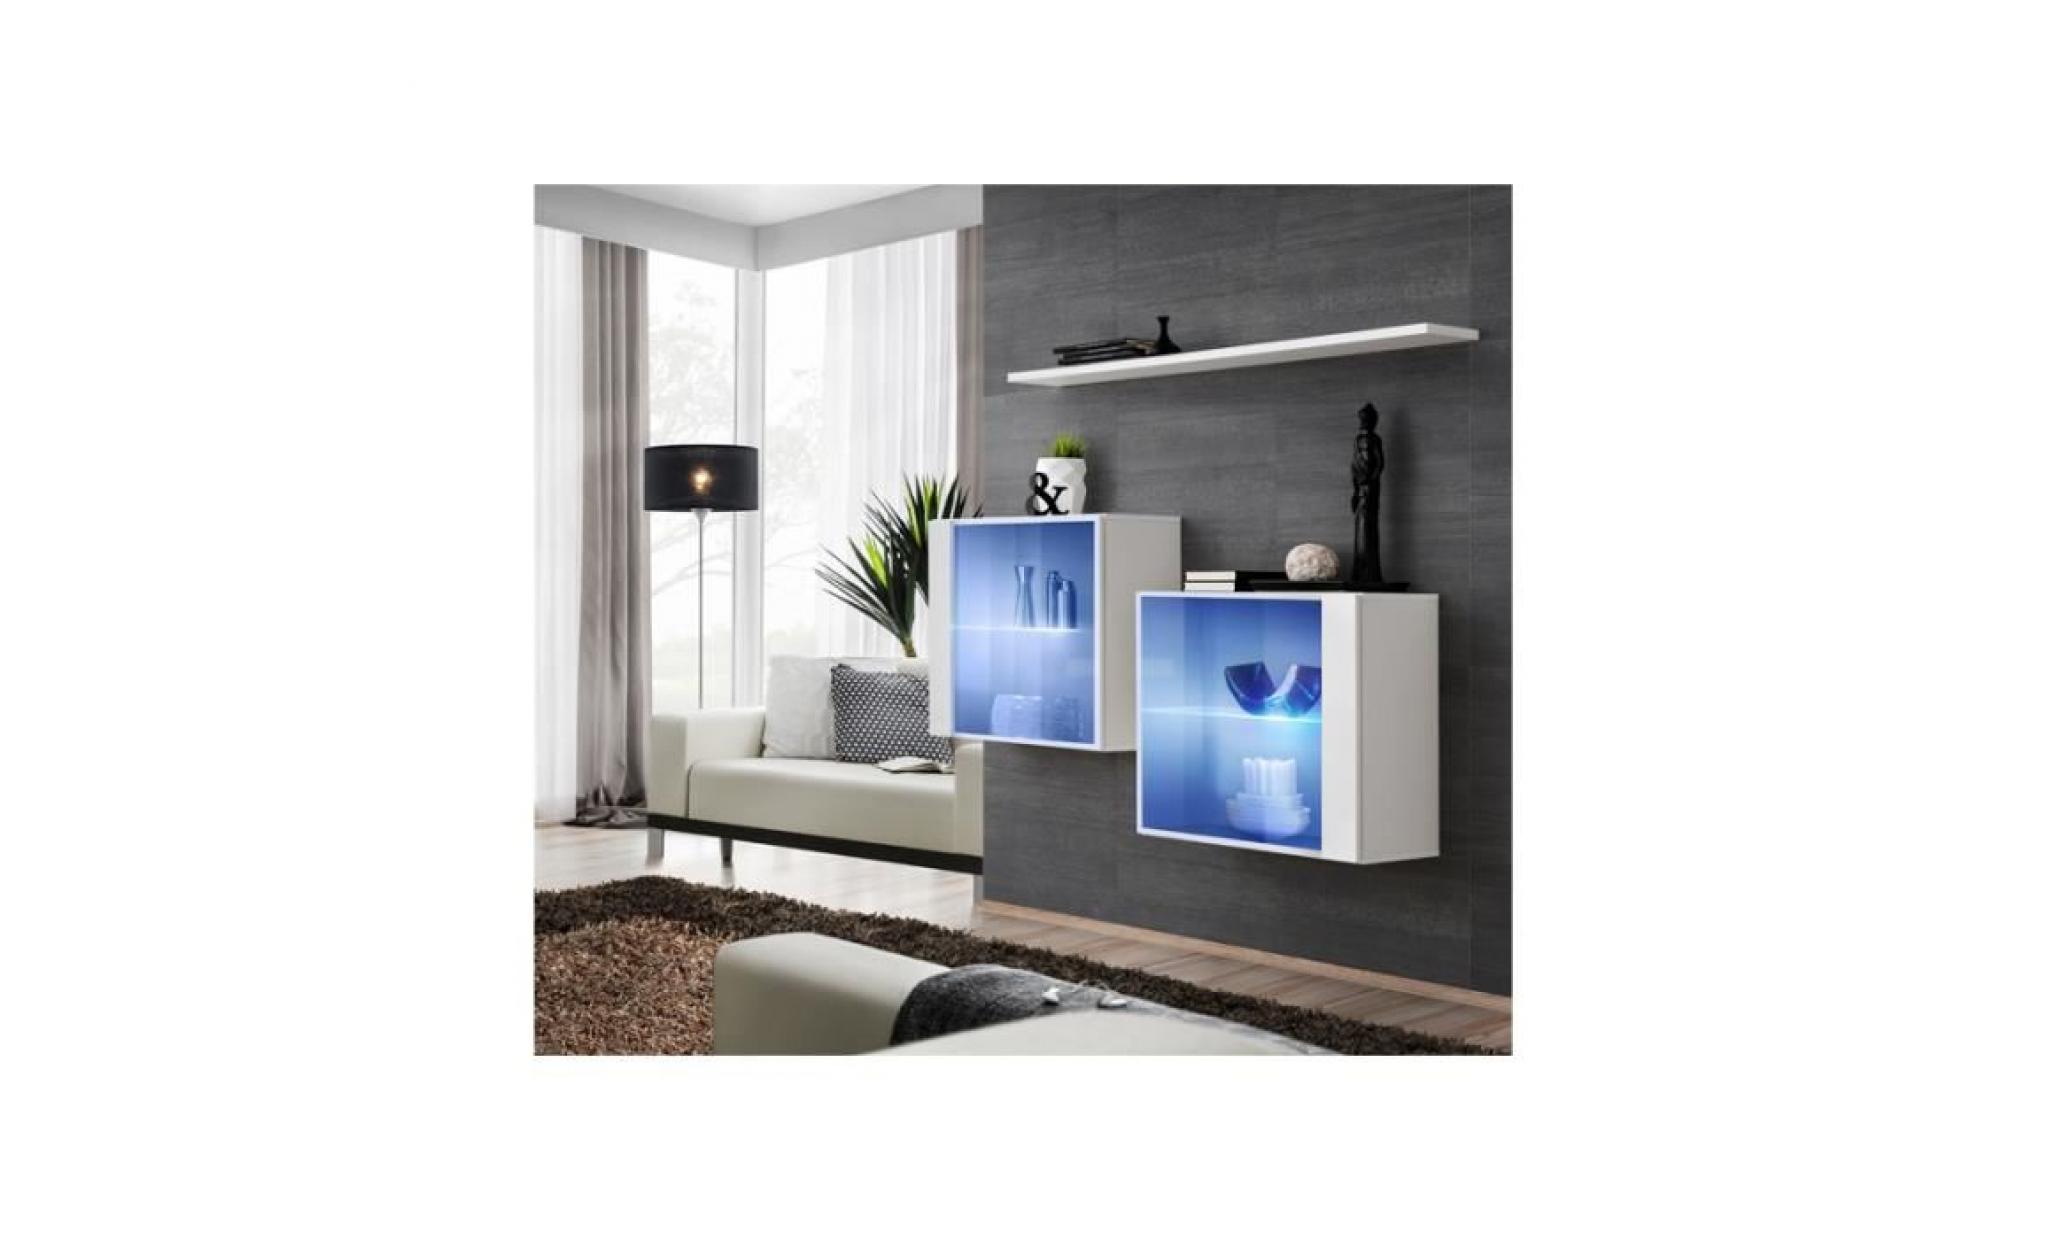 ensemble meuble tv mural    switch sb iii   130 cm  x 110 cm x 30 cm    noir et blanc